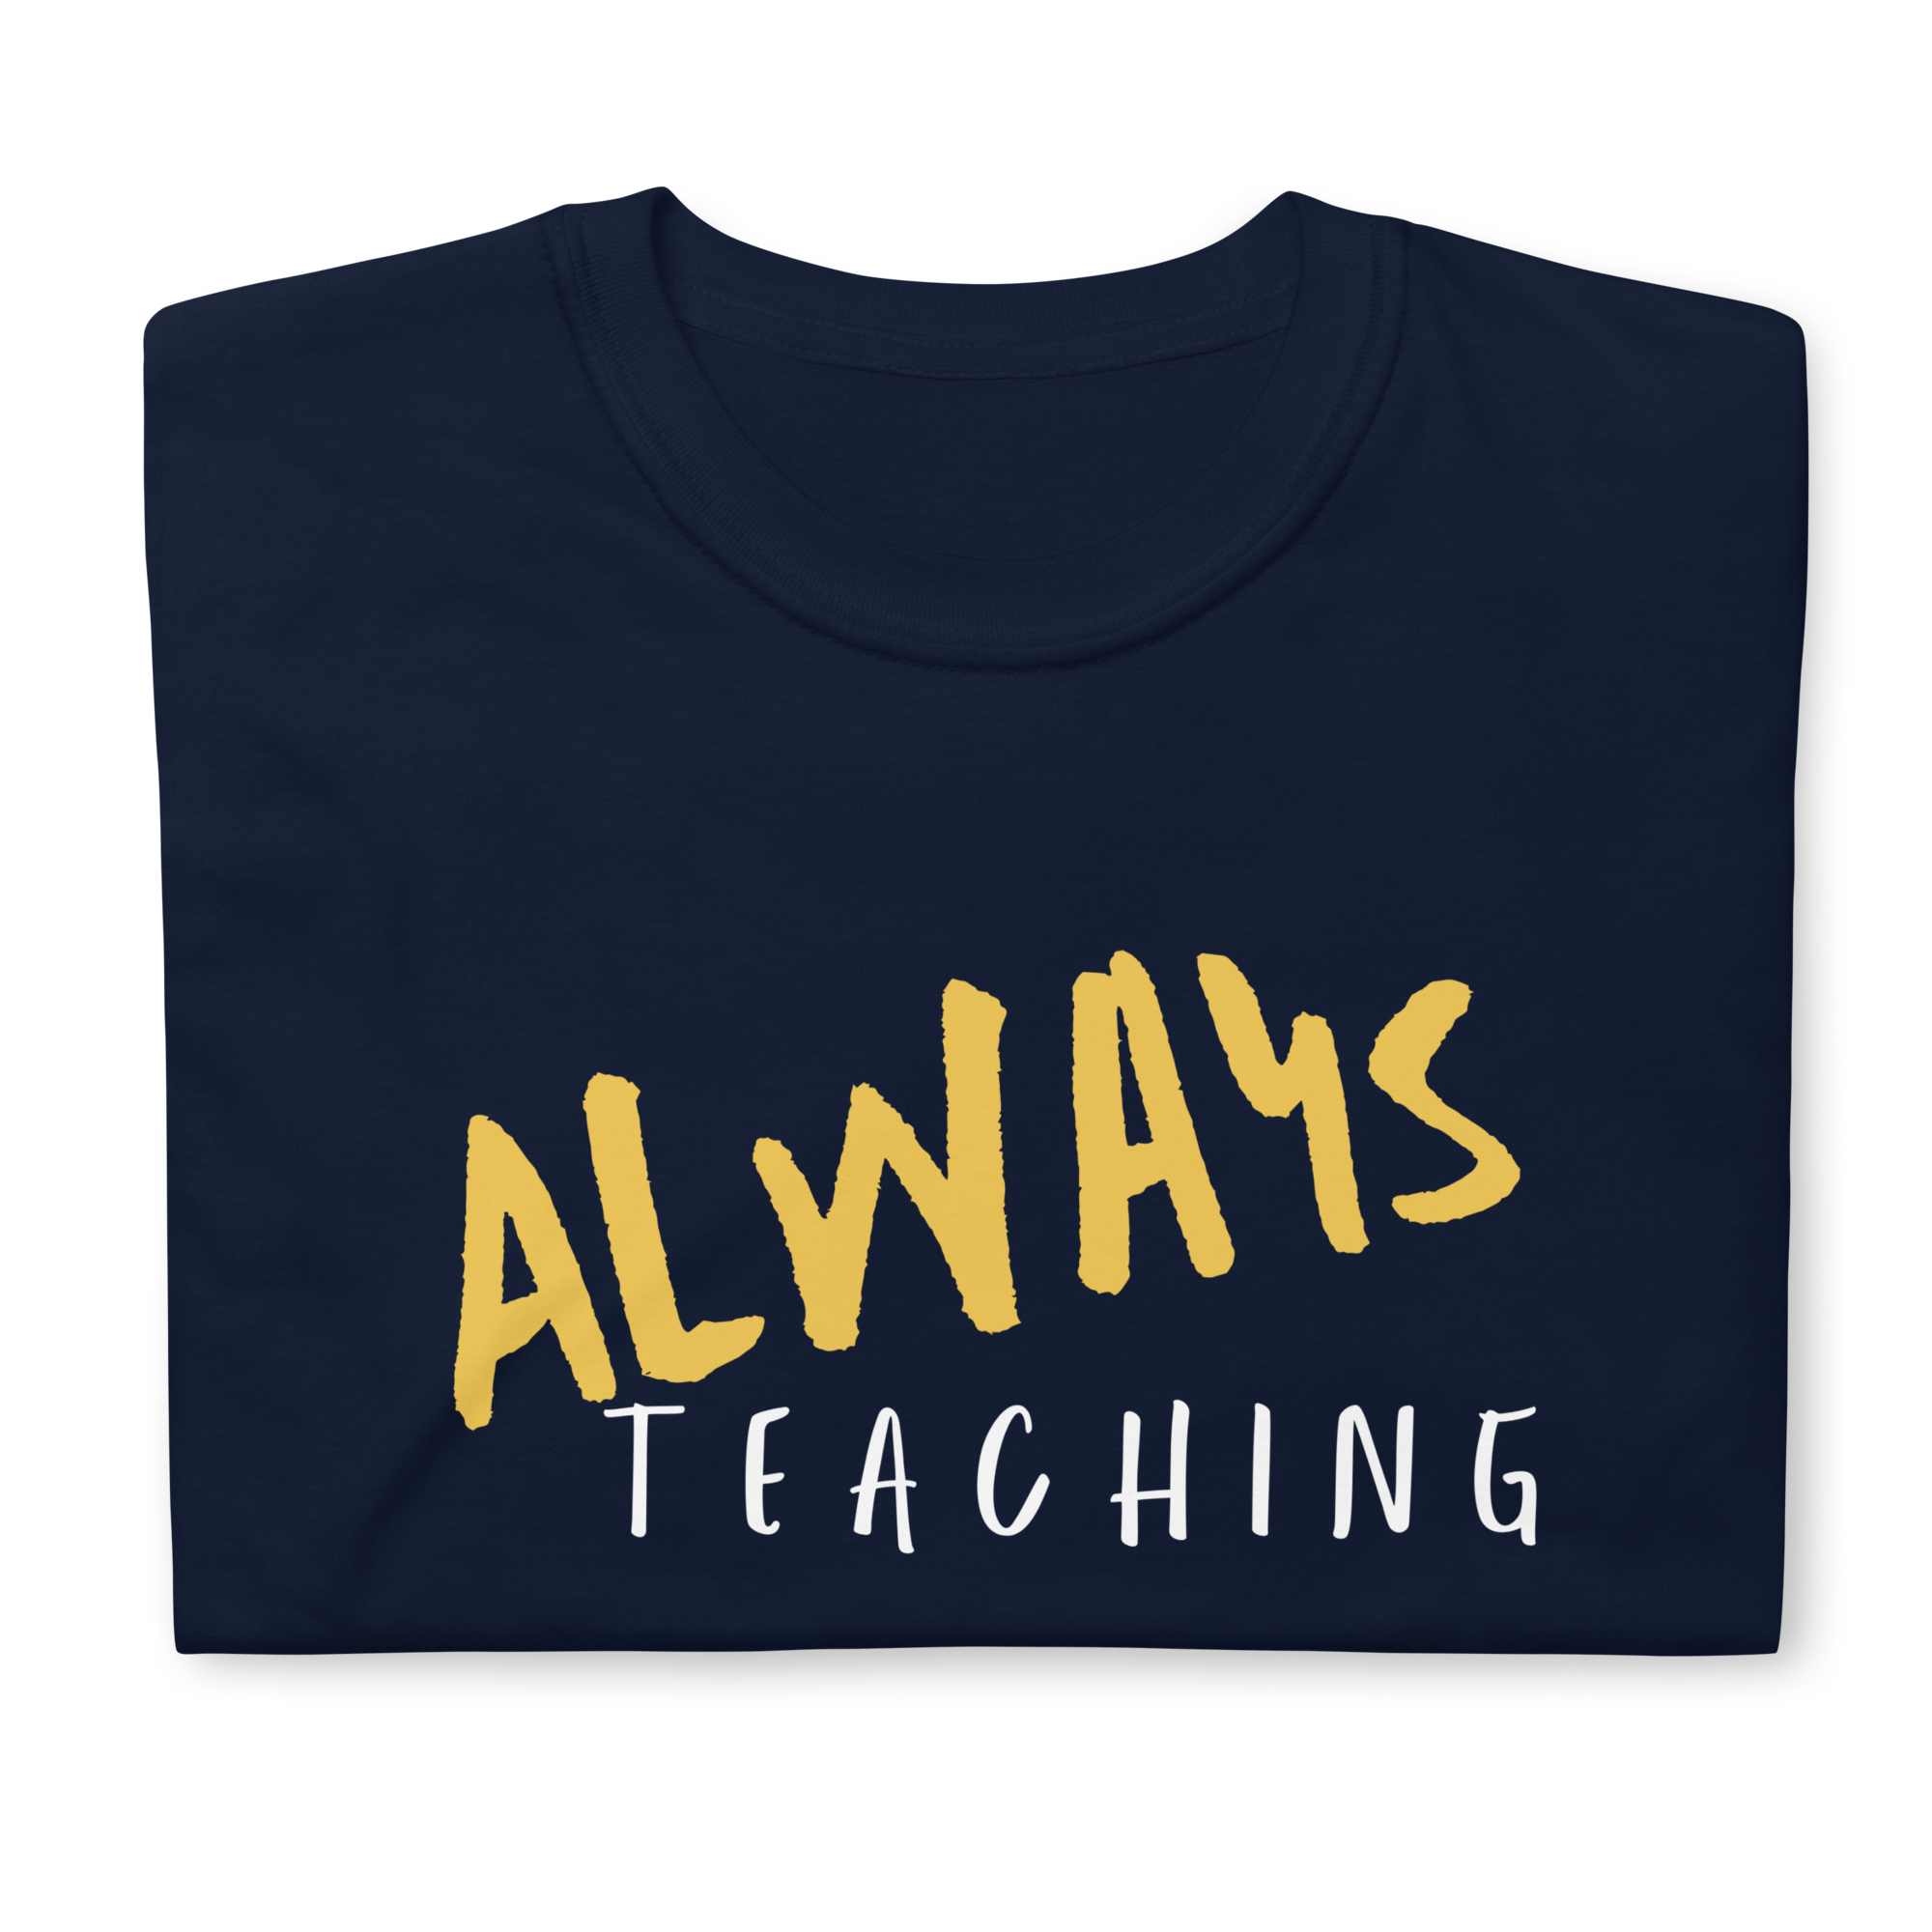 "Always Teaching" Shirt